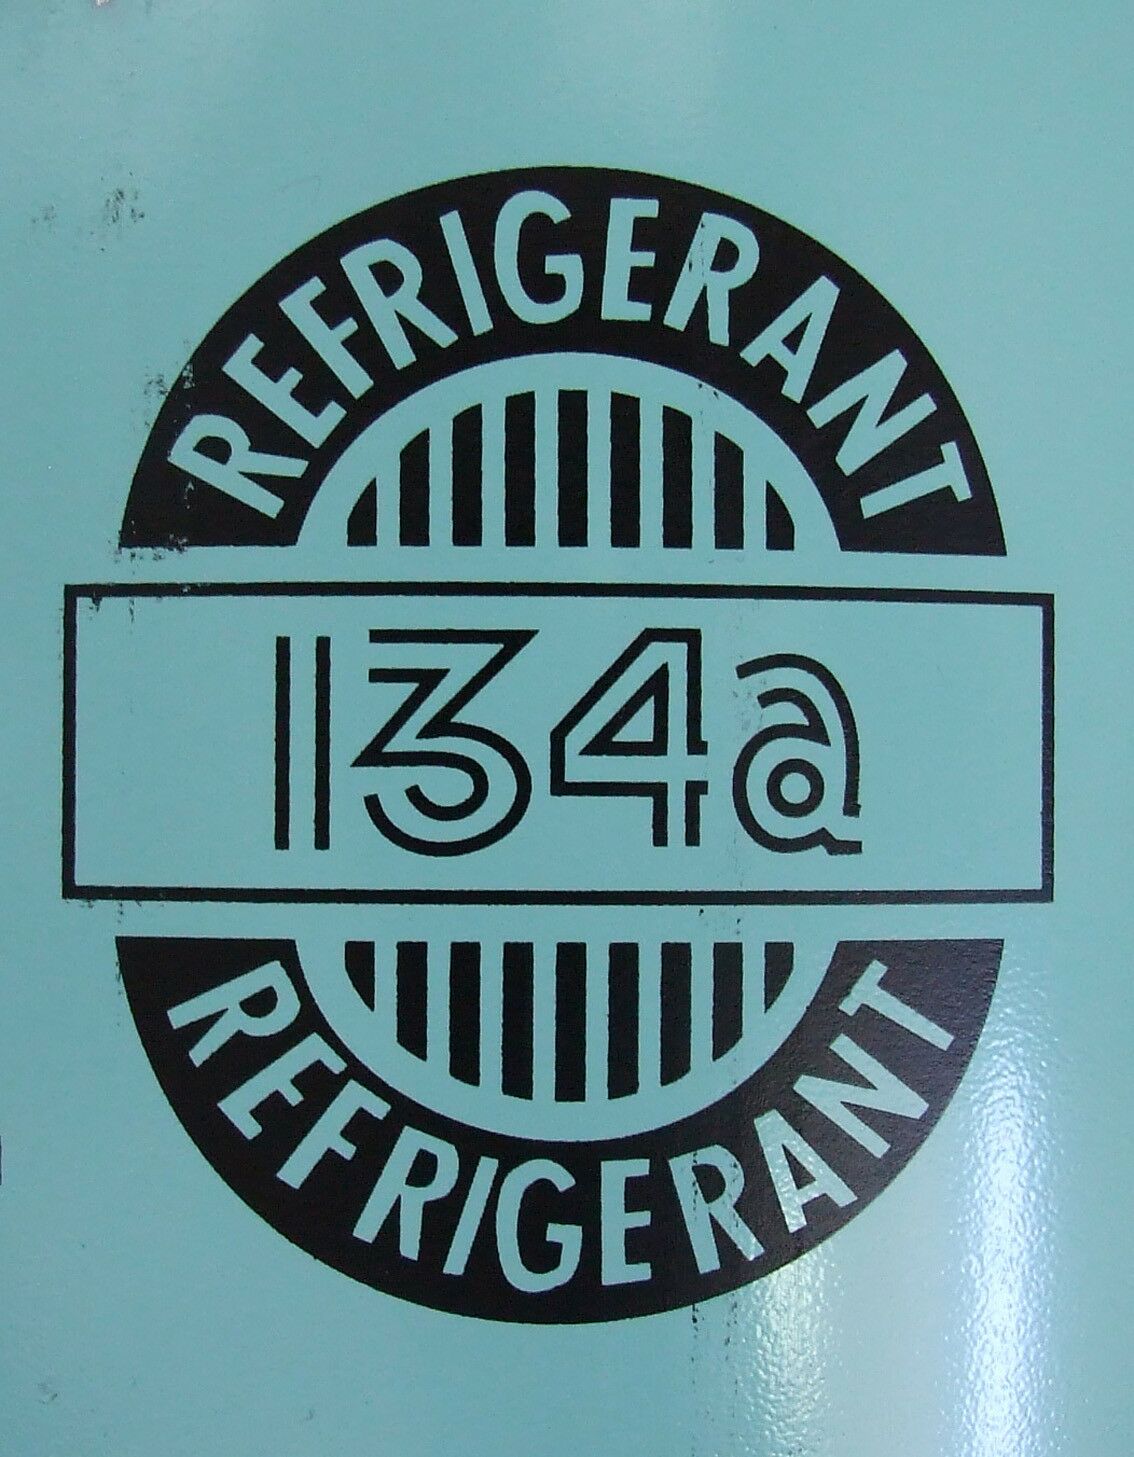 Freon r134a -global nepovratna boca 13.6 kg